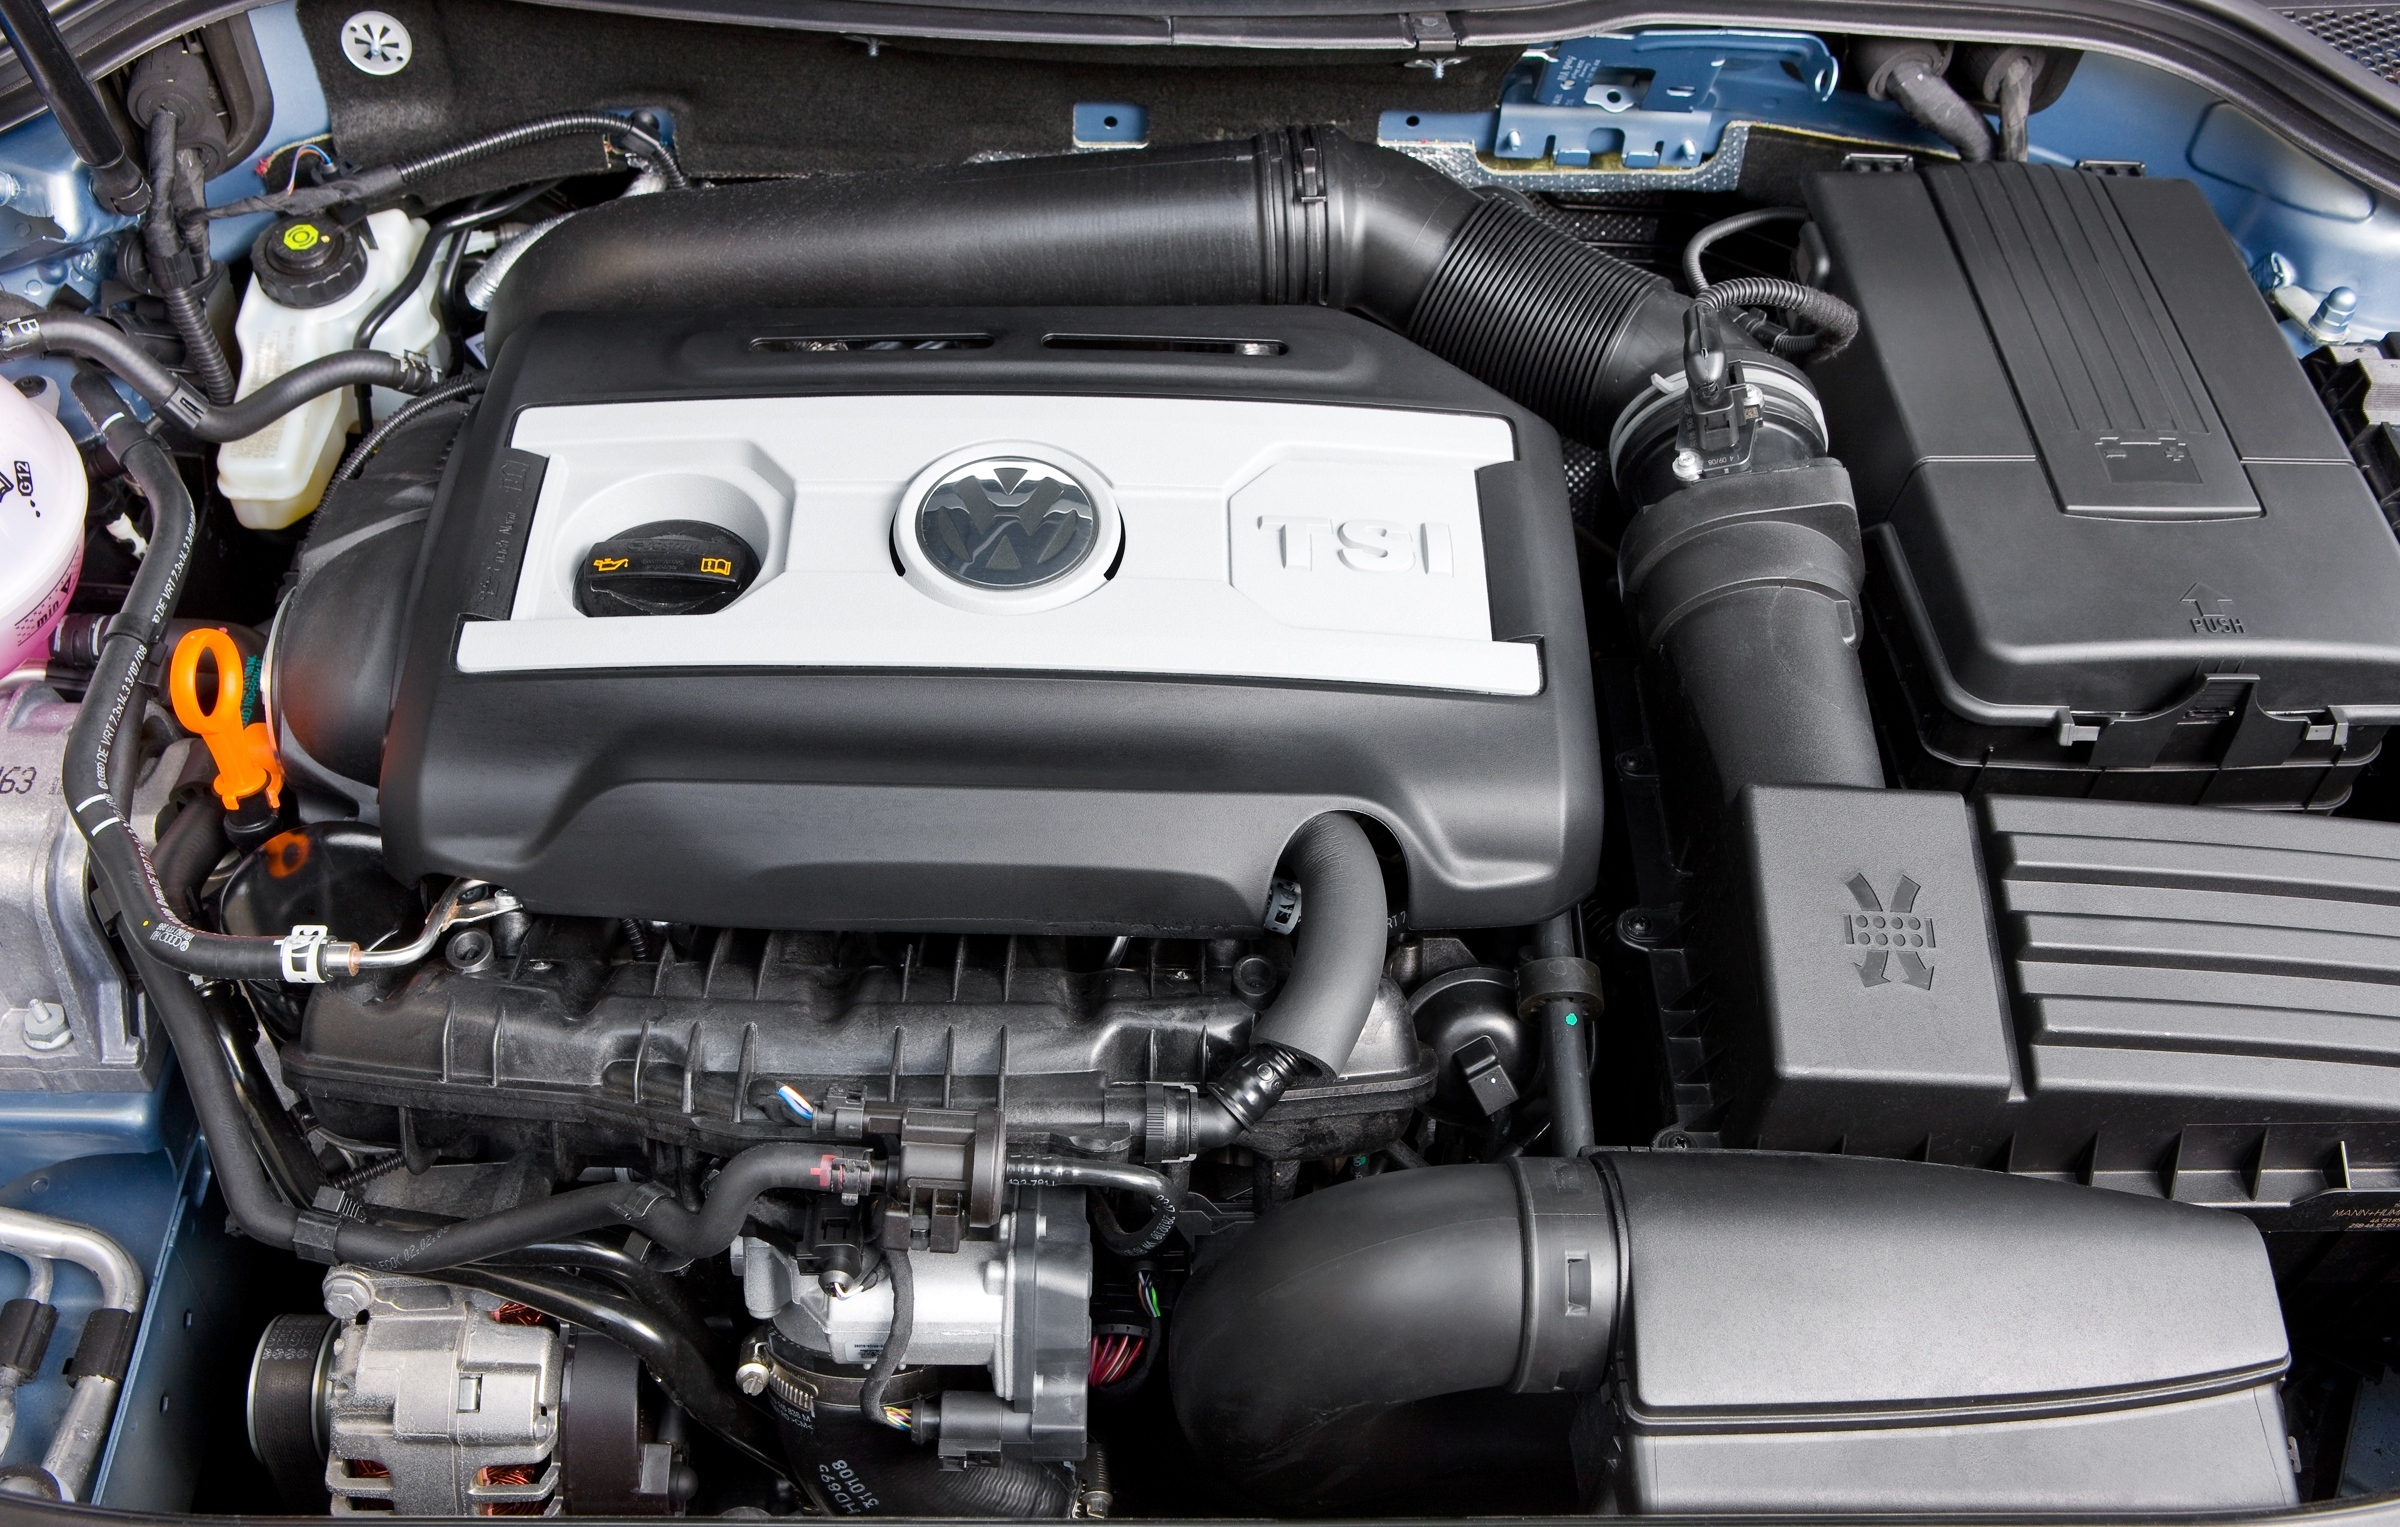 VW 1.8 liter turbo engine